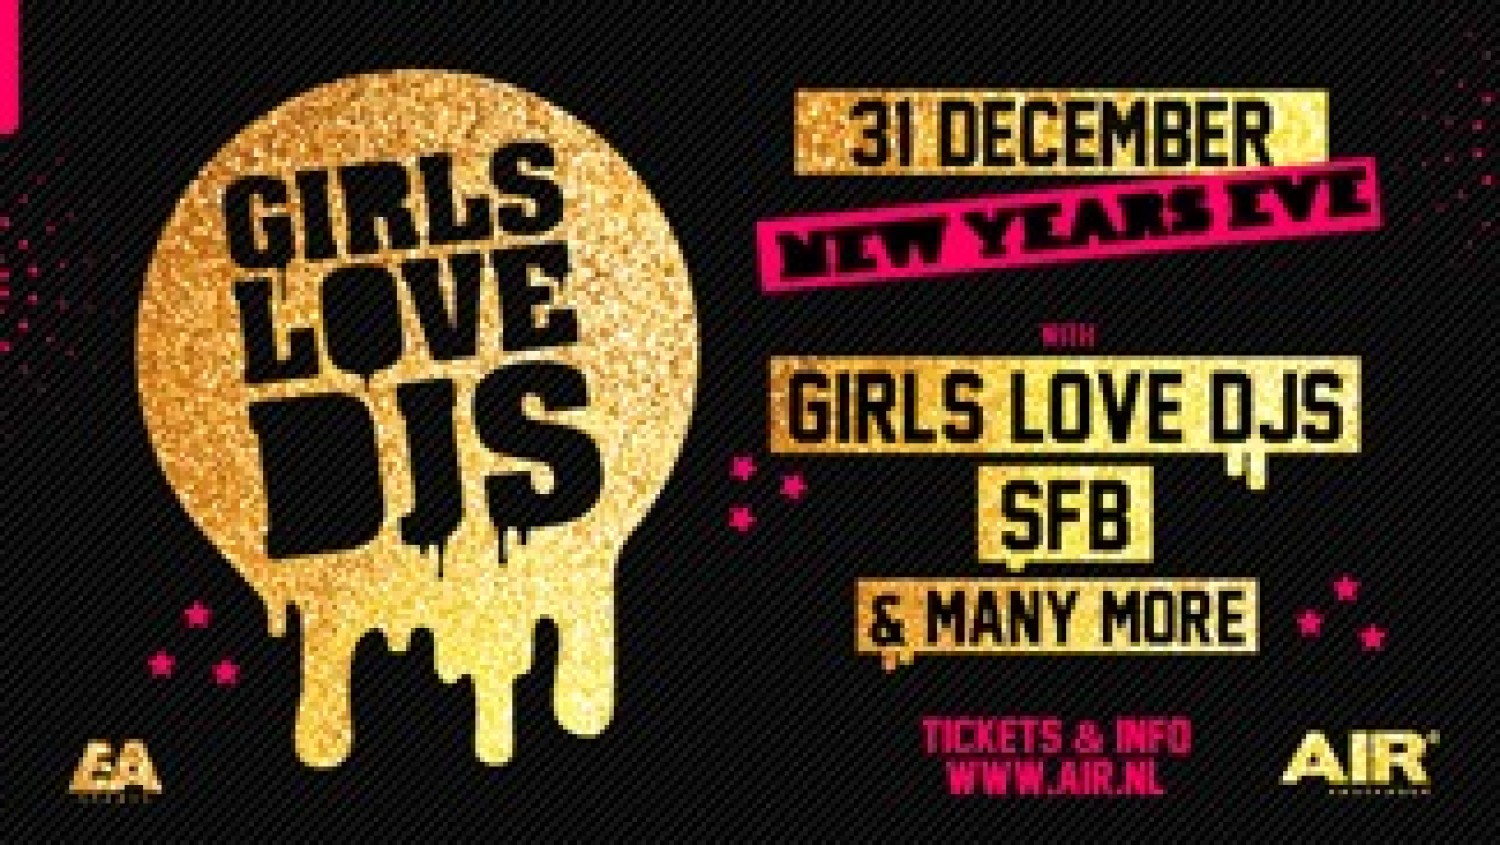 Party nieuws: New Years Eve 2019 vier je in AIR met GirlsLoveDJs!